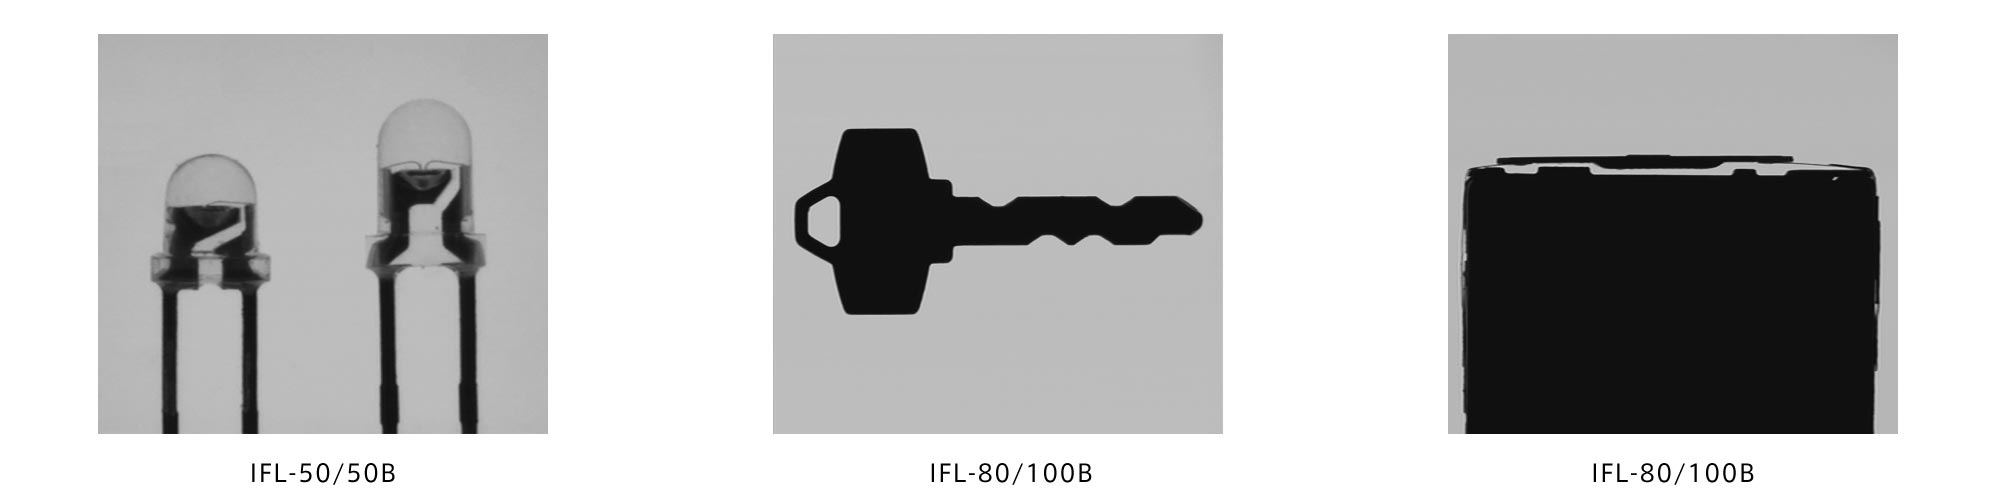 IFL Product Description 01